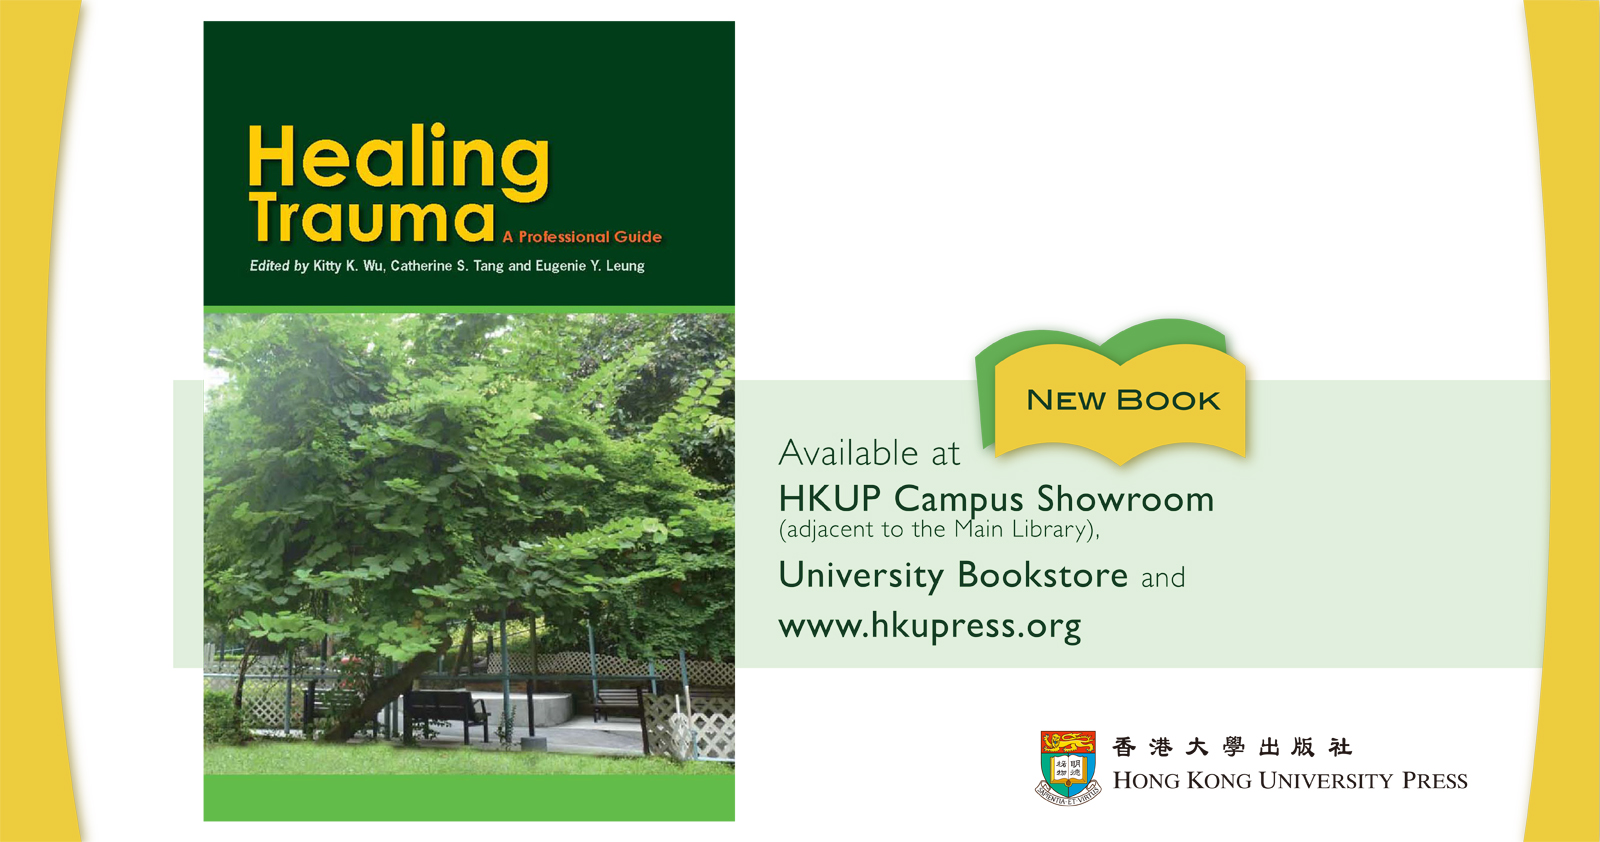 New Book from HKUP - Healing Trauma